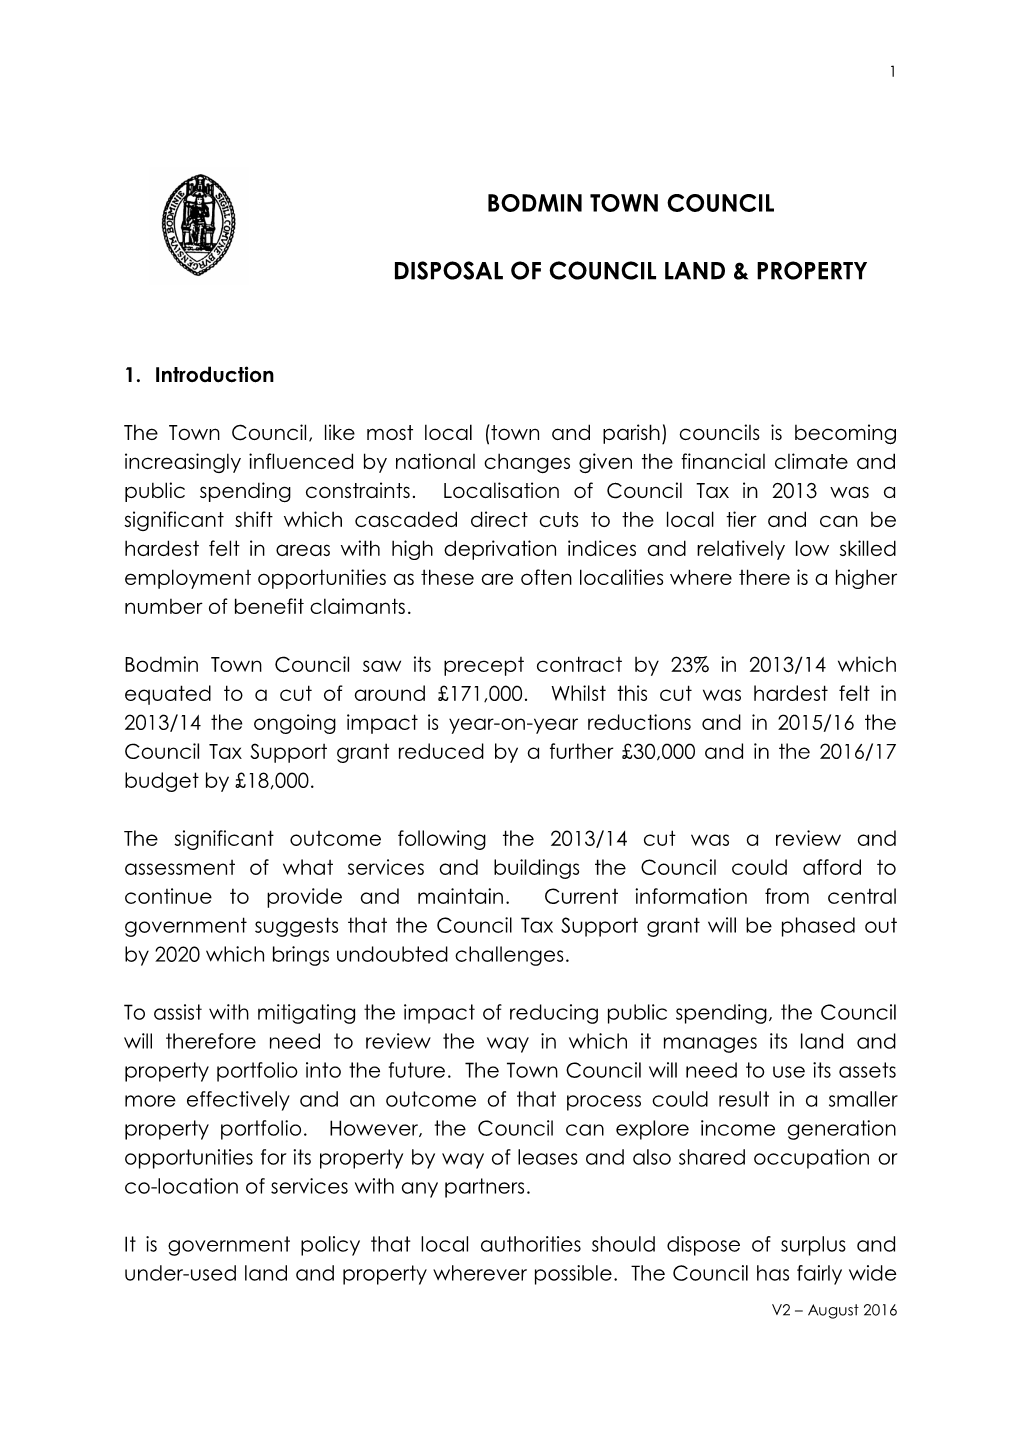 Bodmin Town Council Disposal of Council Land & Property